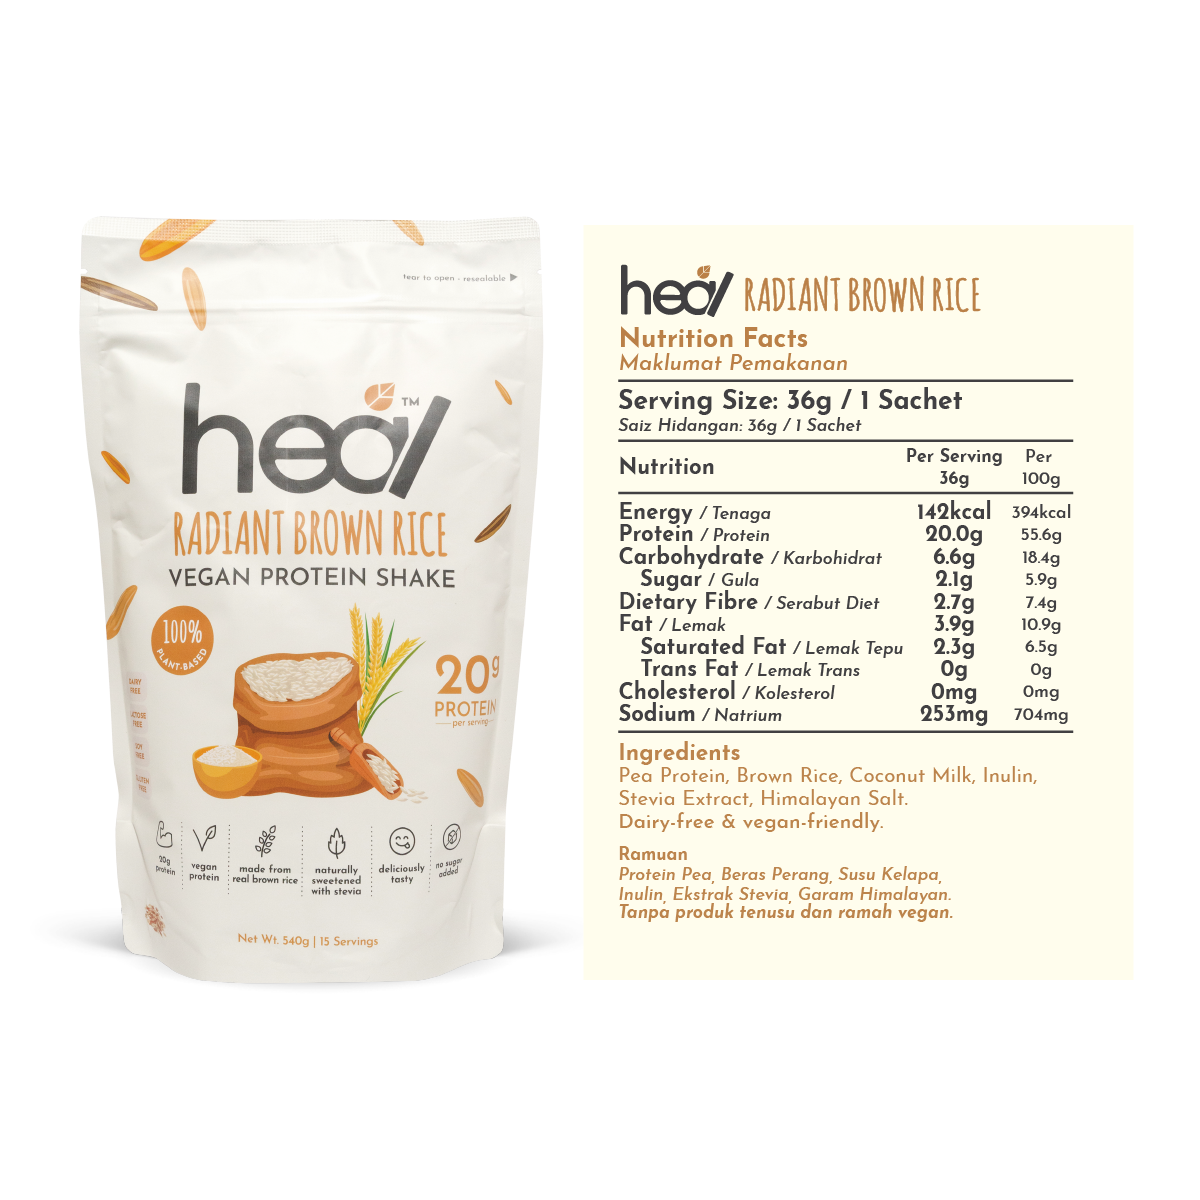 [Subscription Plan] Heal Radiant Brown Rice Vegan Protein Shake, 15 Servings Value Pack